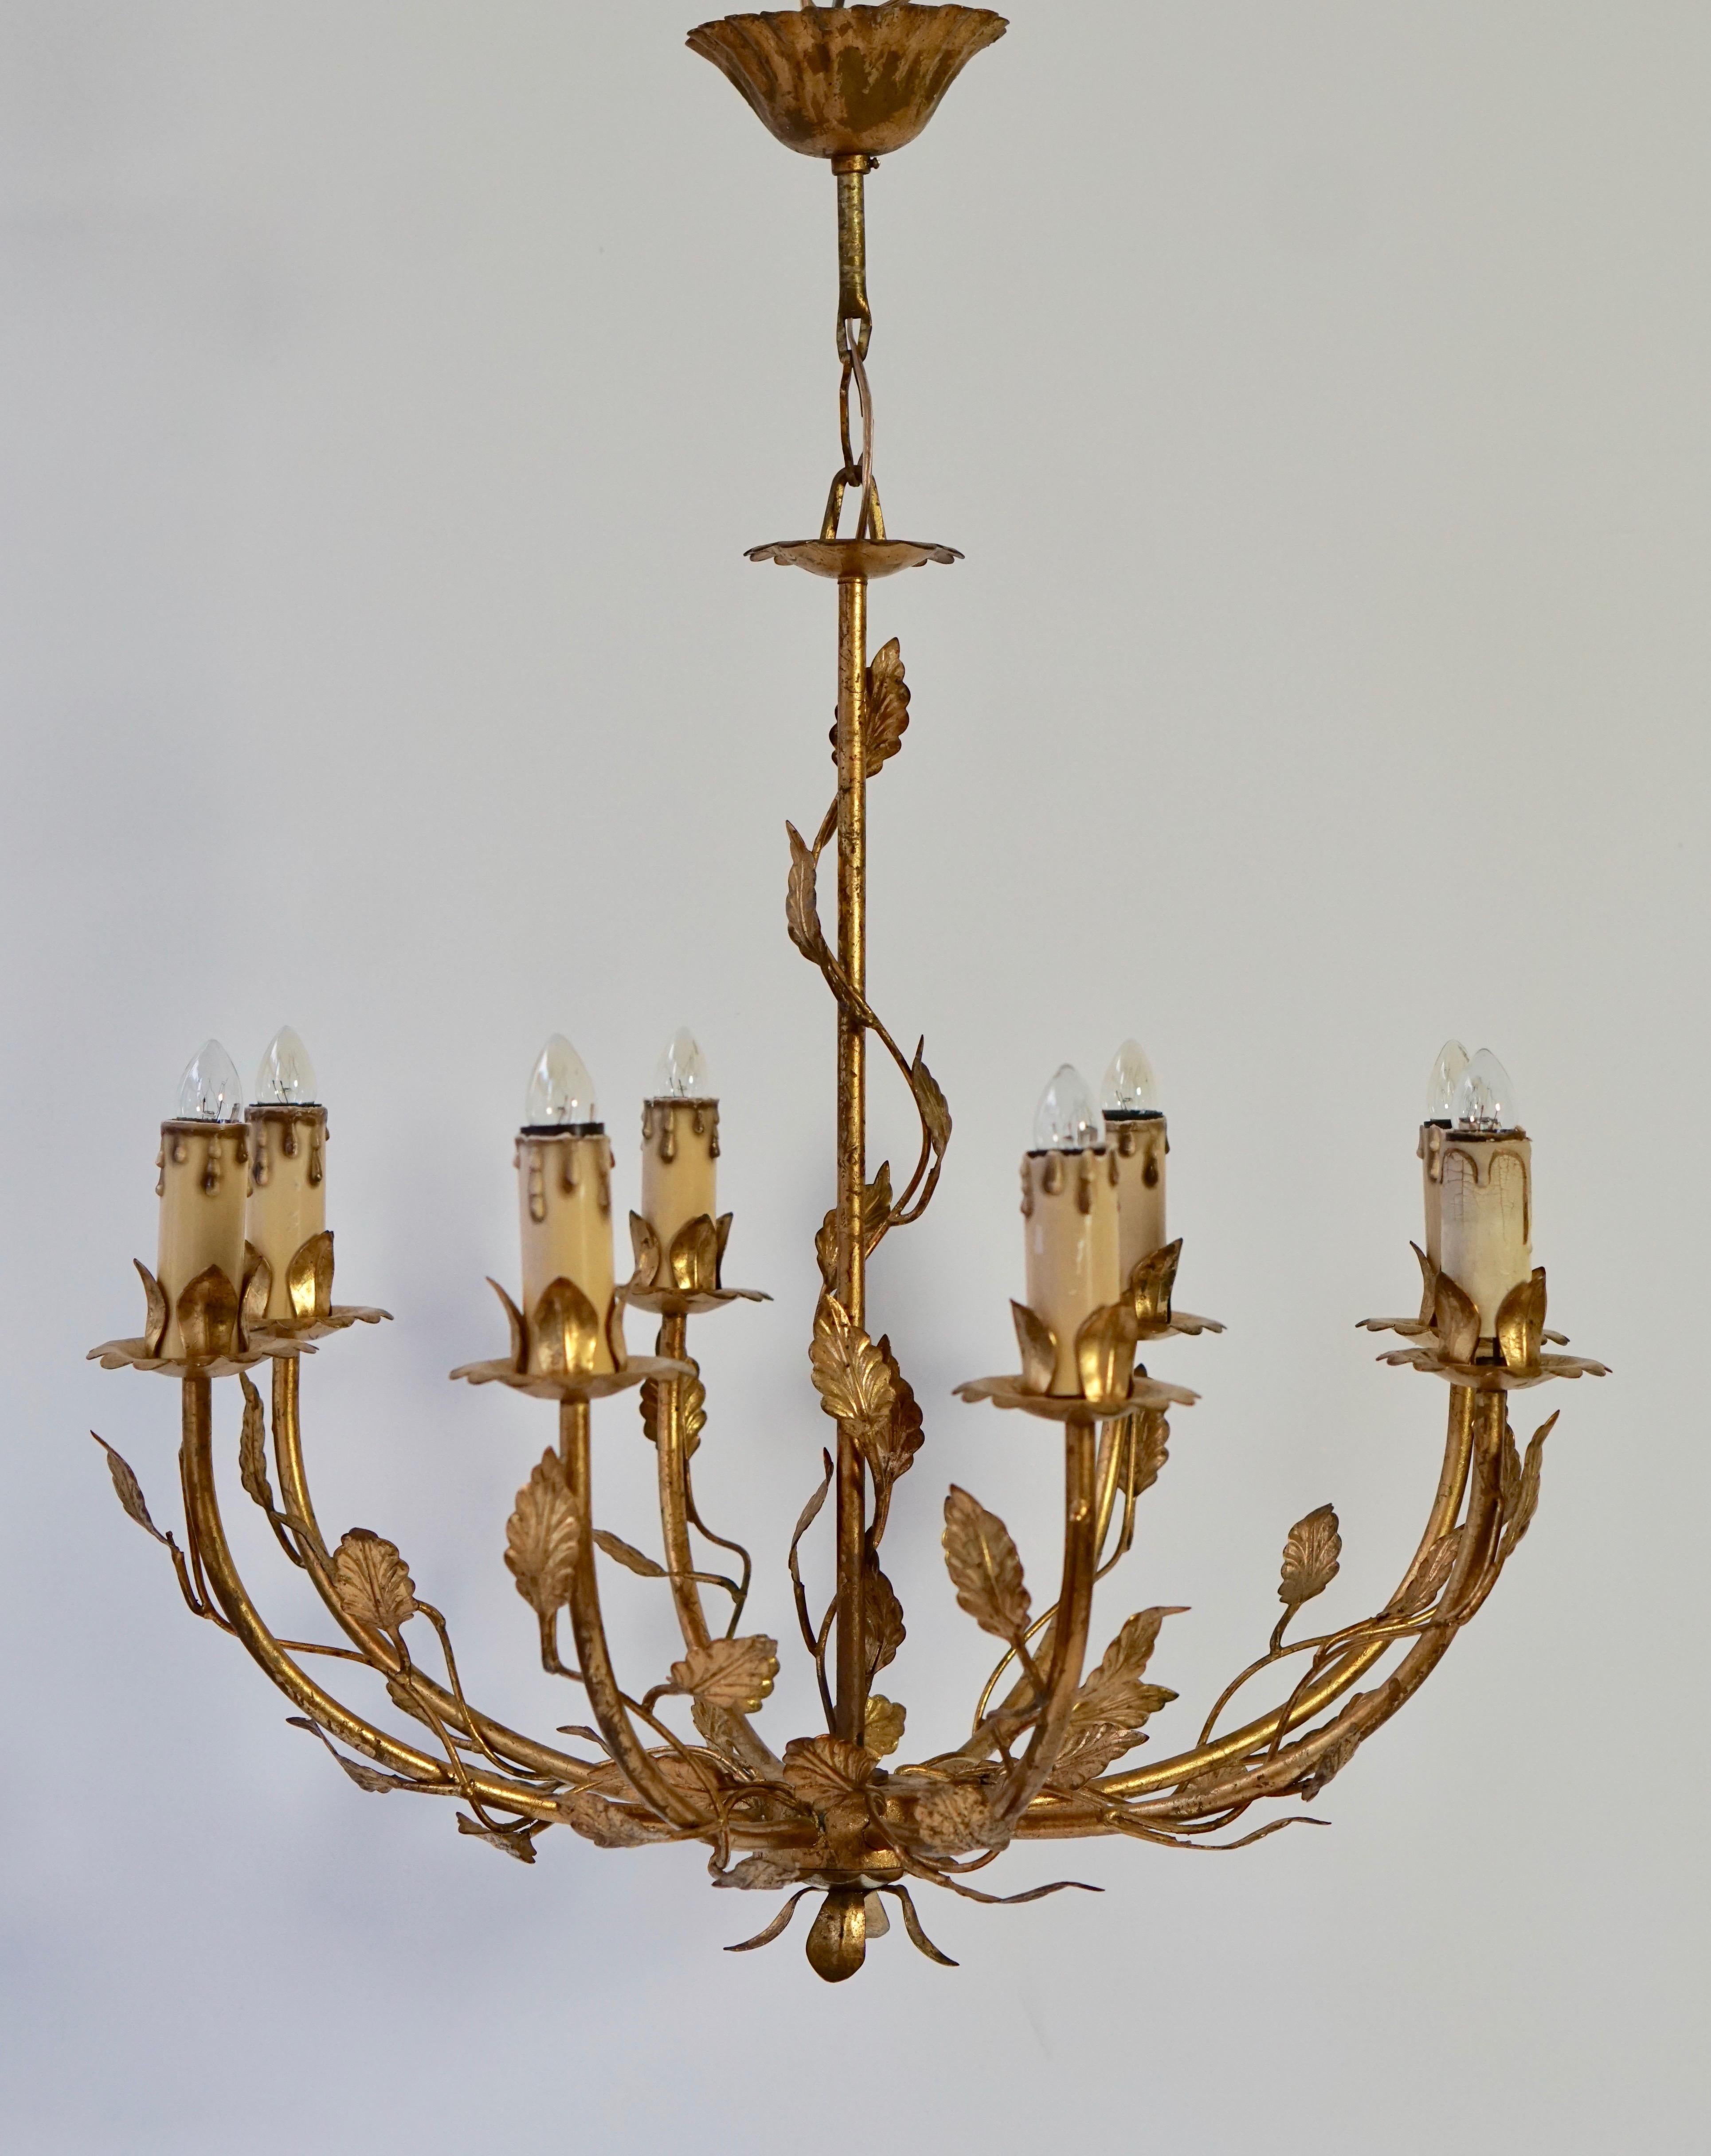 Midcentury gilt metal chandelier, Italy.
Diameter 57 cm.
Height fixture 54 cm.
Total height 70 cm.
Eight E14 bulbs.